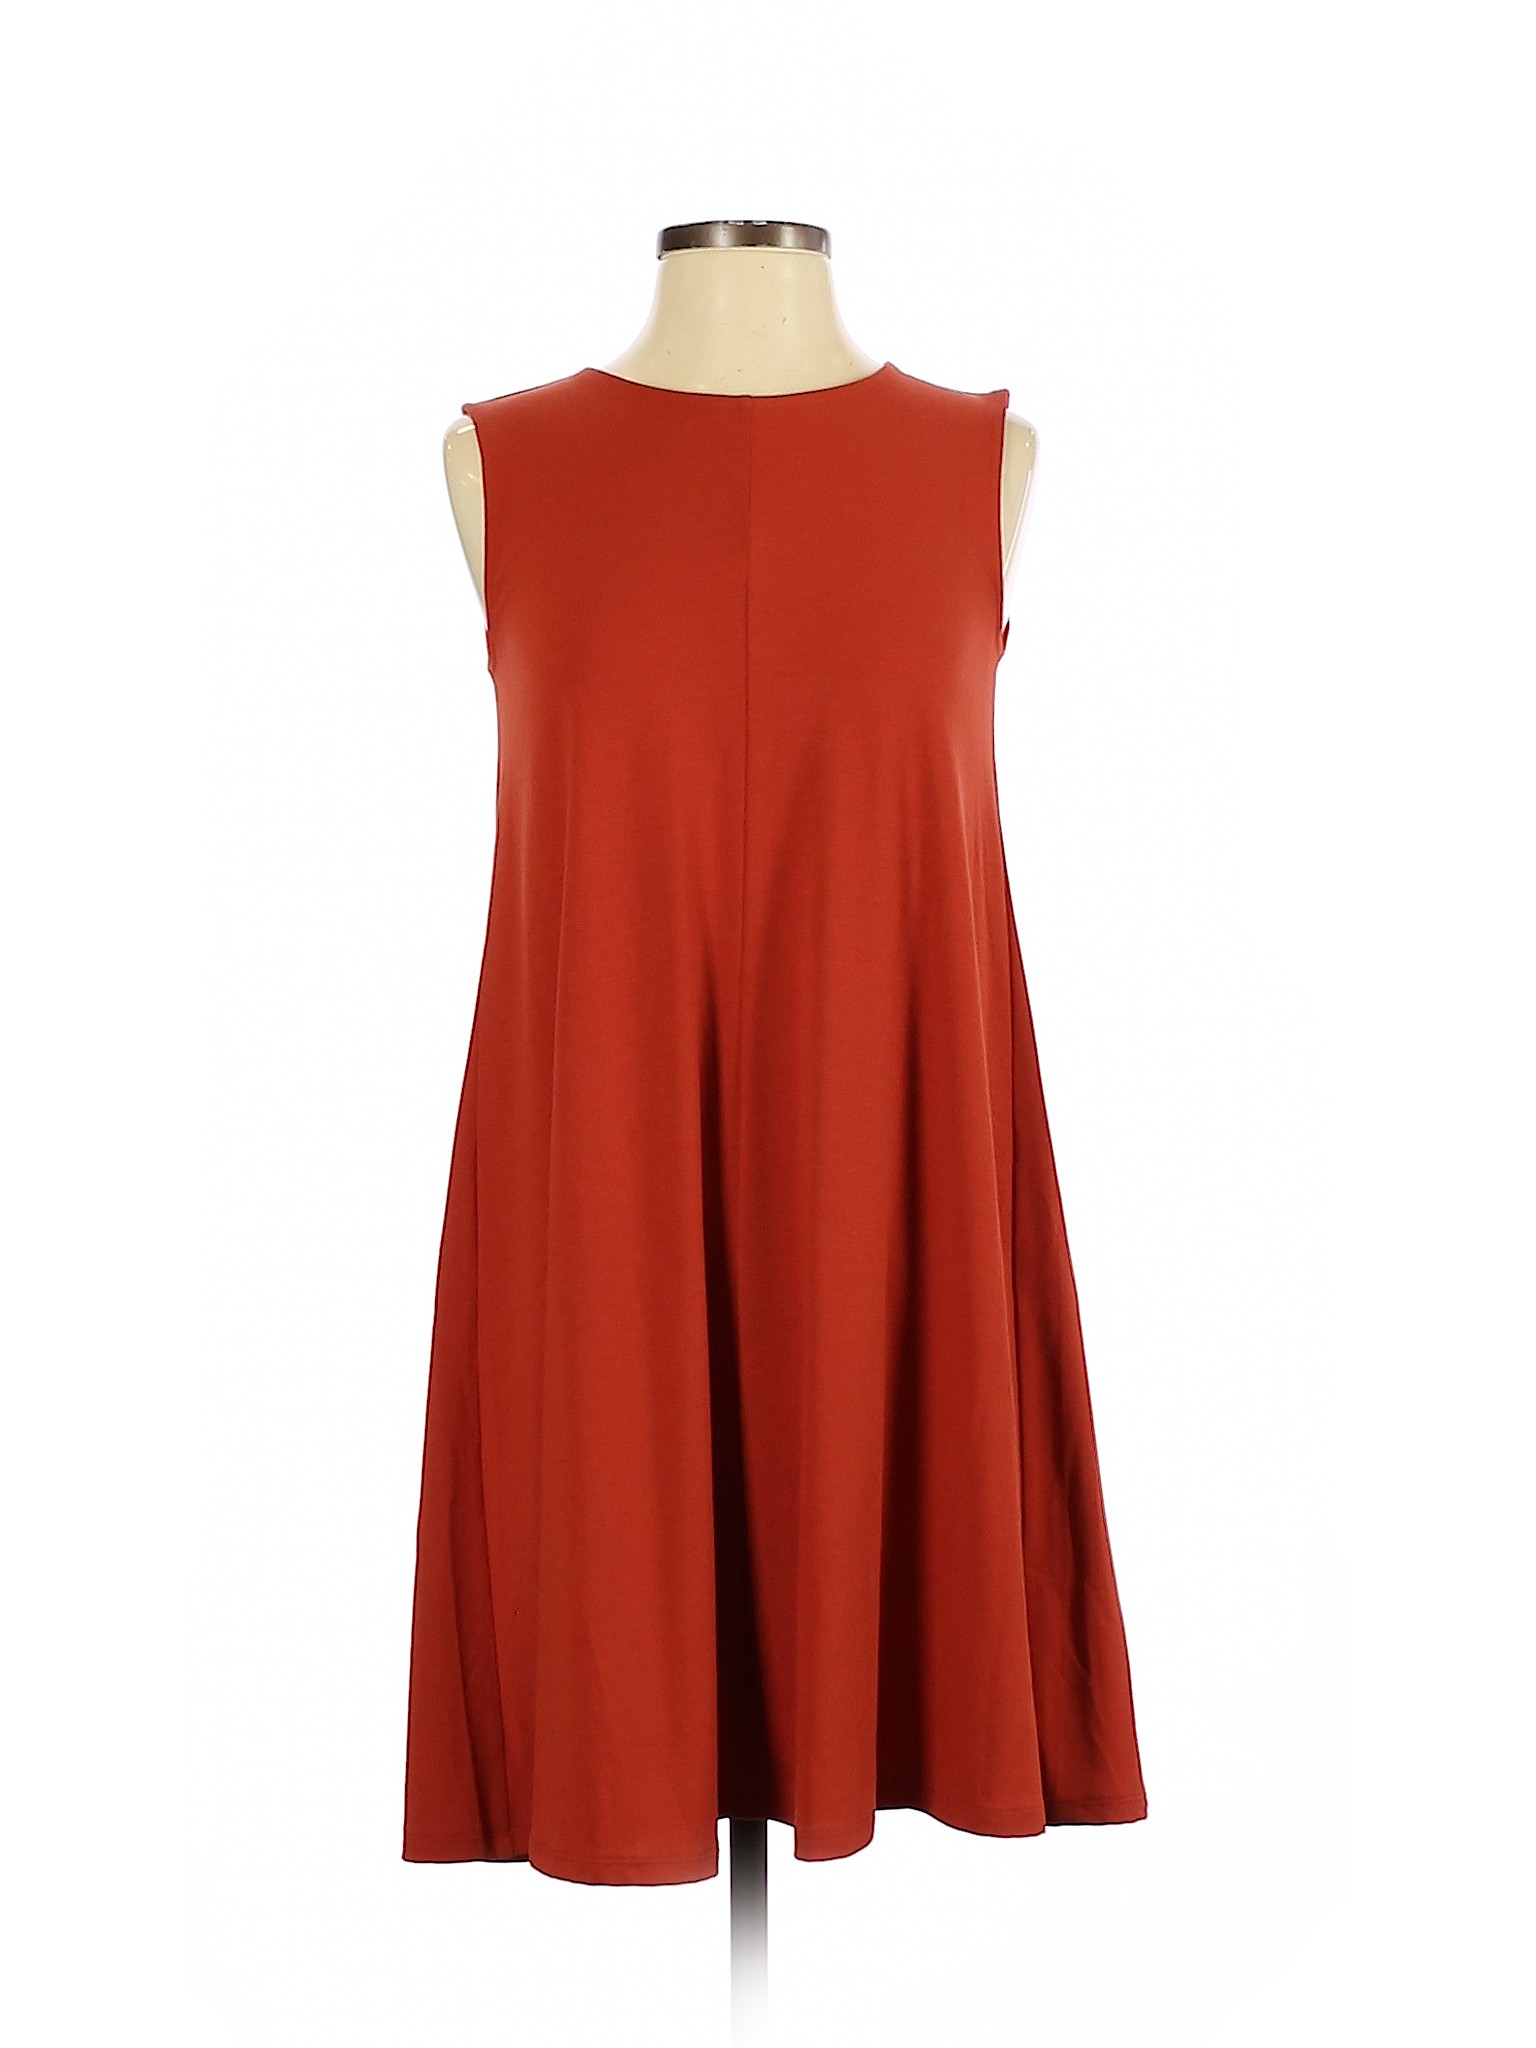 Uniqlo Women Orange Casual Dress XS | eBay